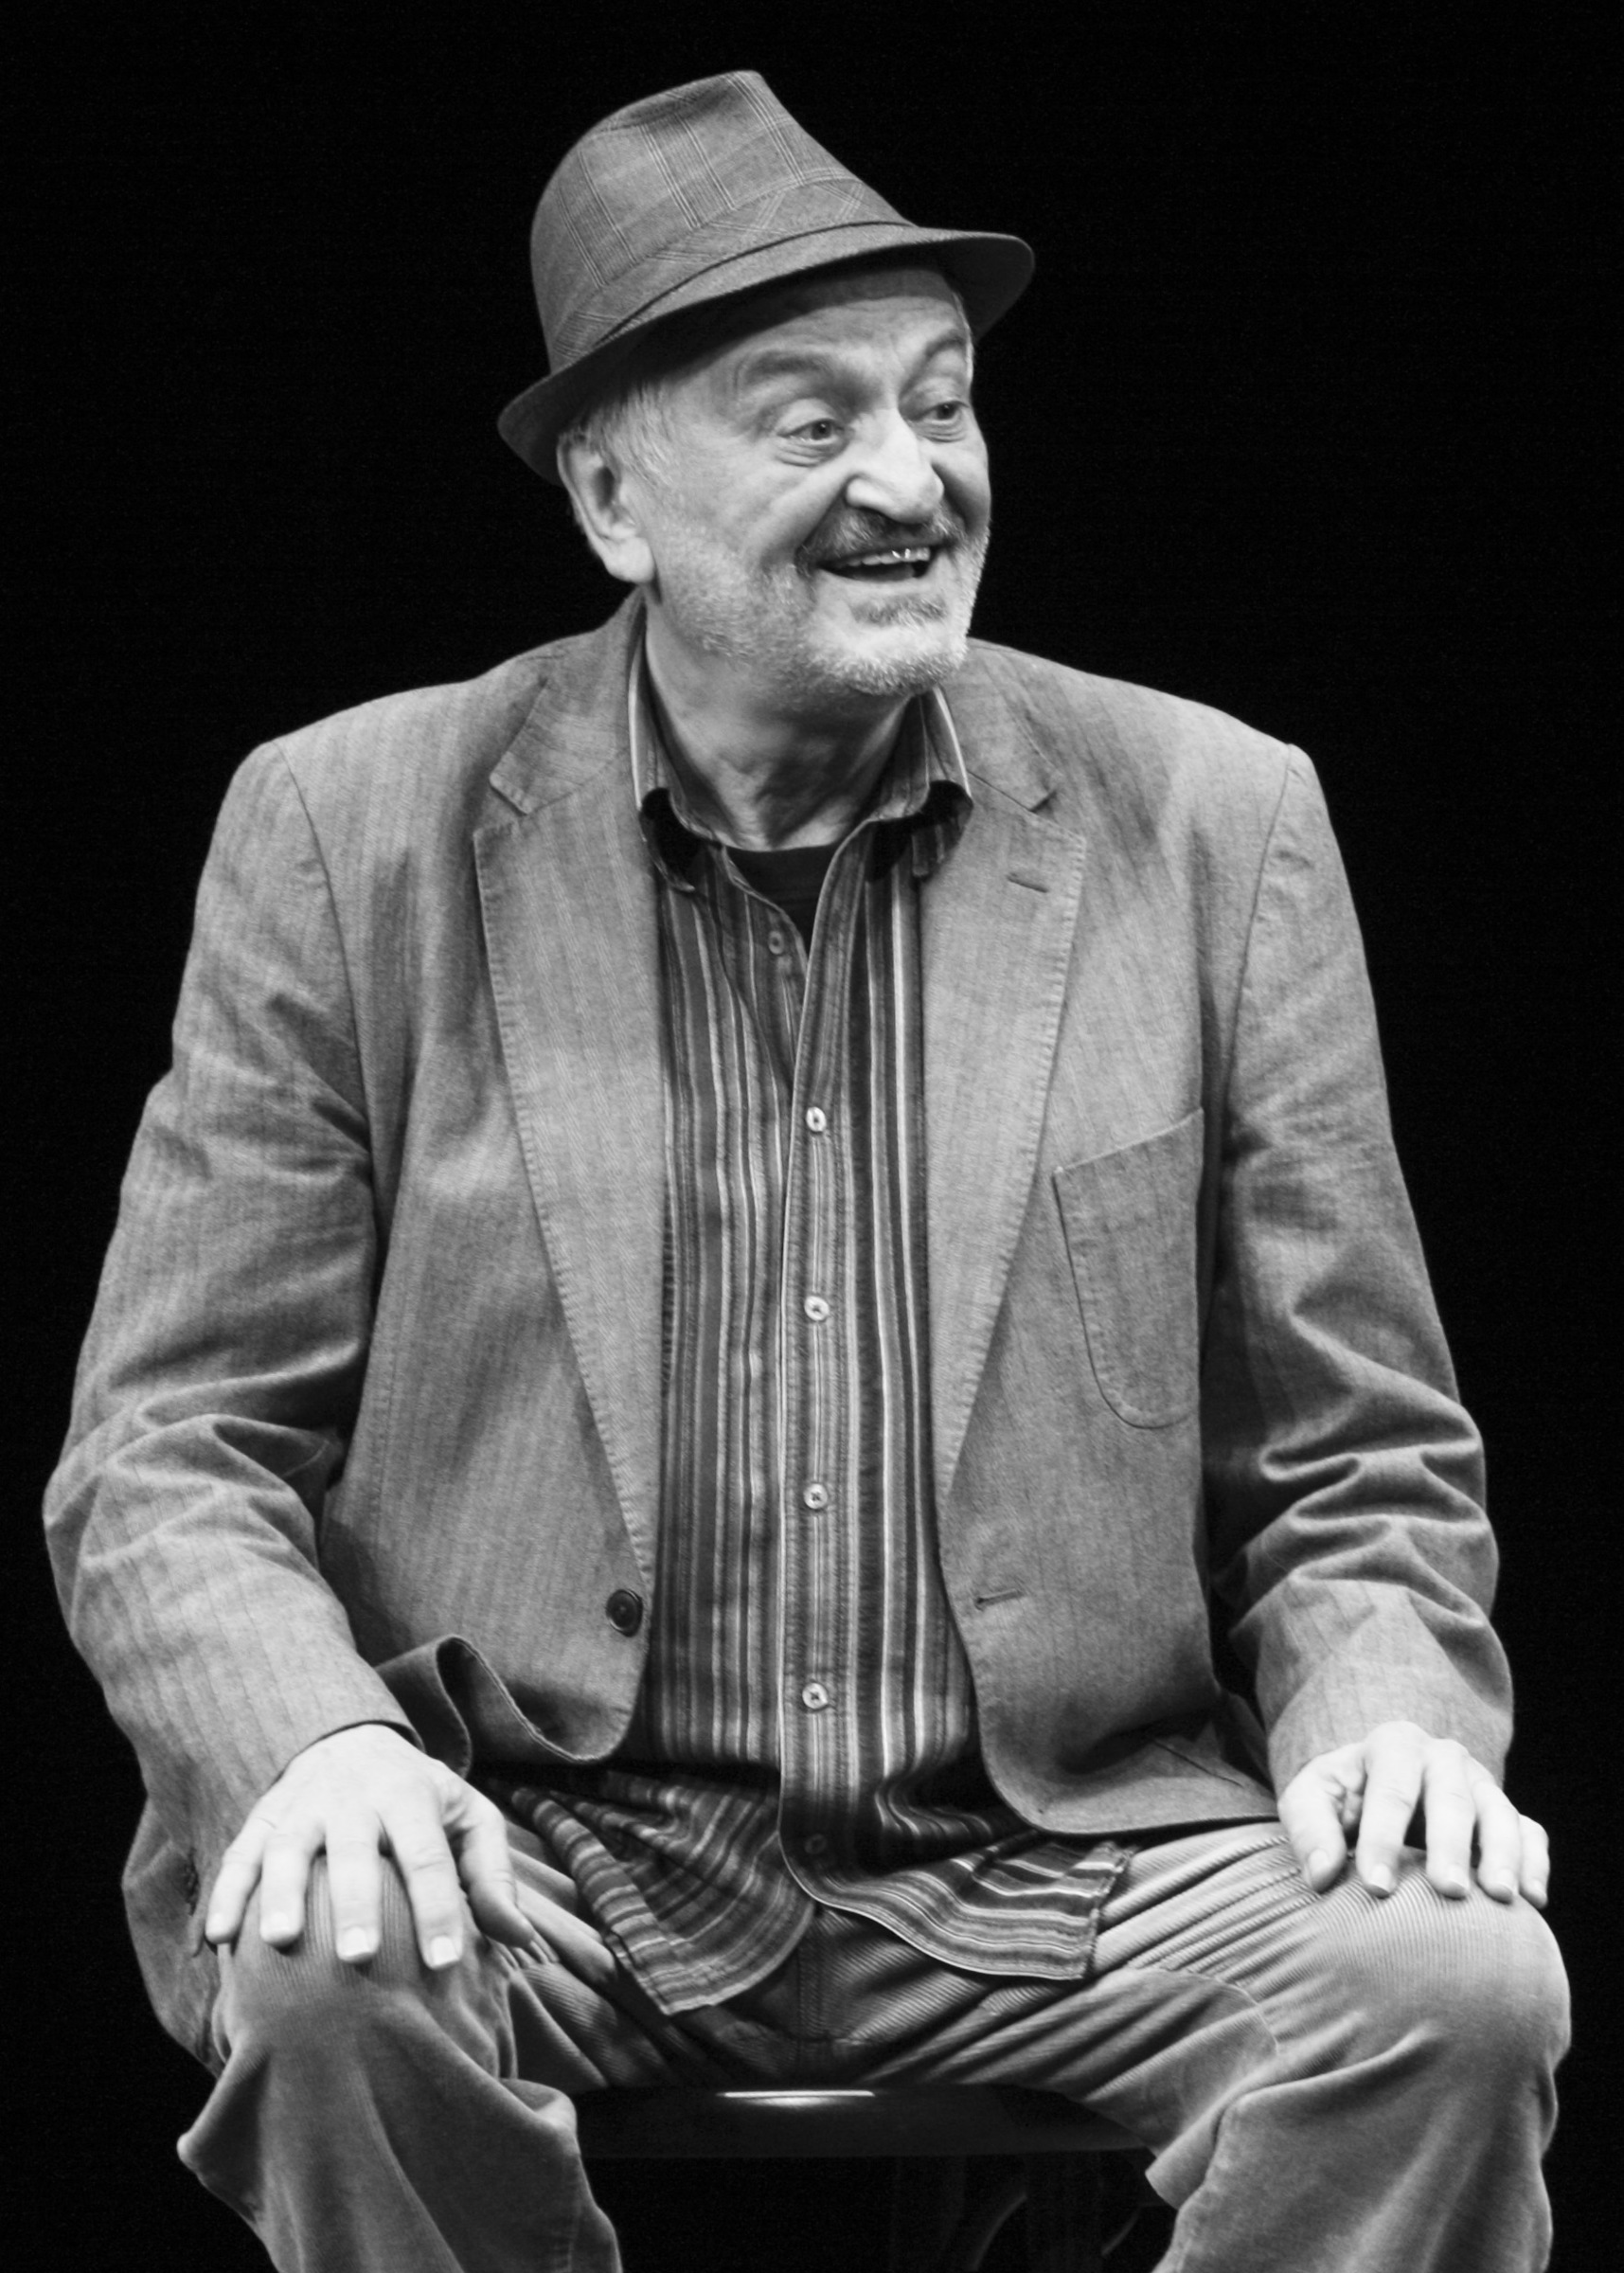 Milan Lasica in theatre (foto Ctibor Bachratý)